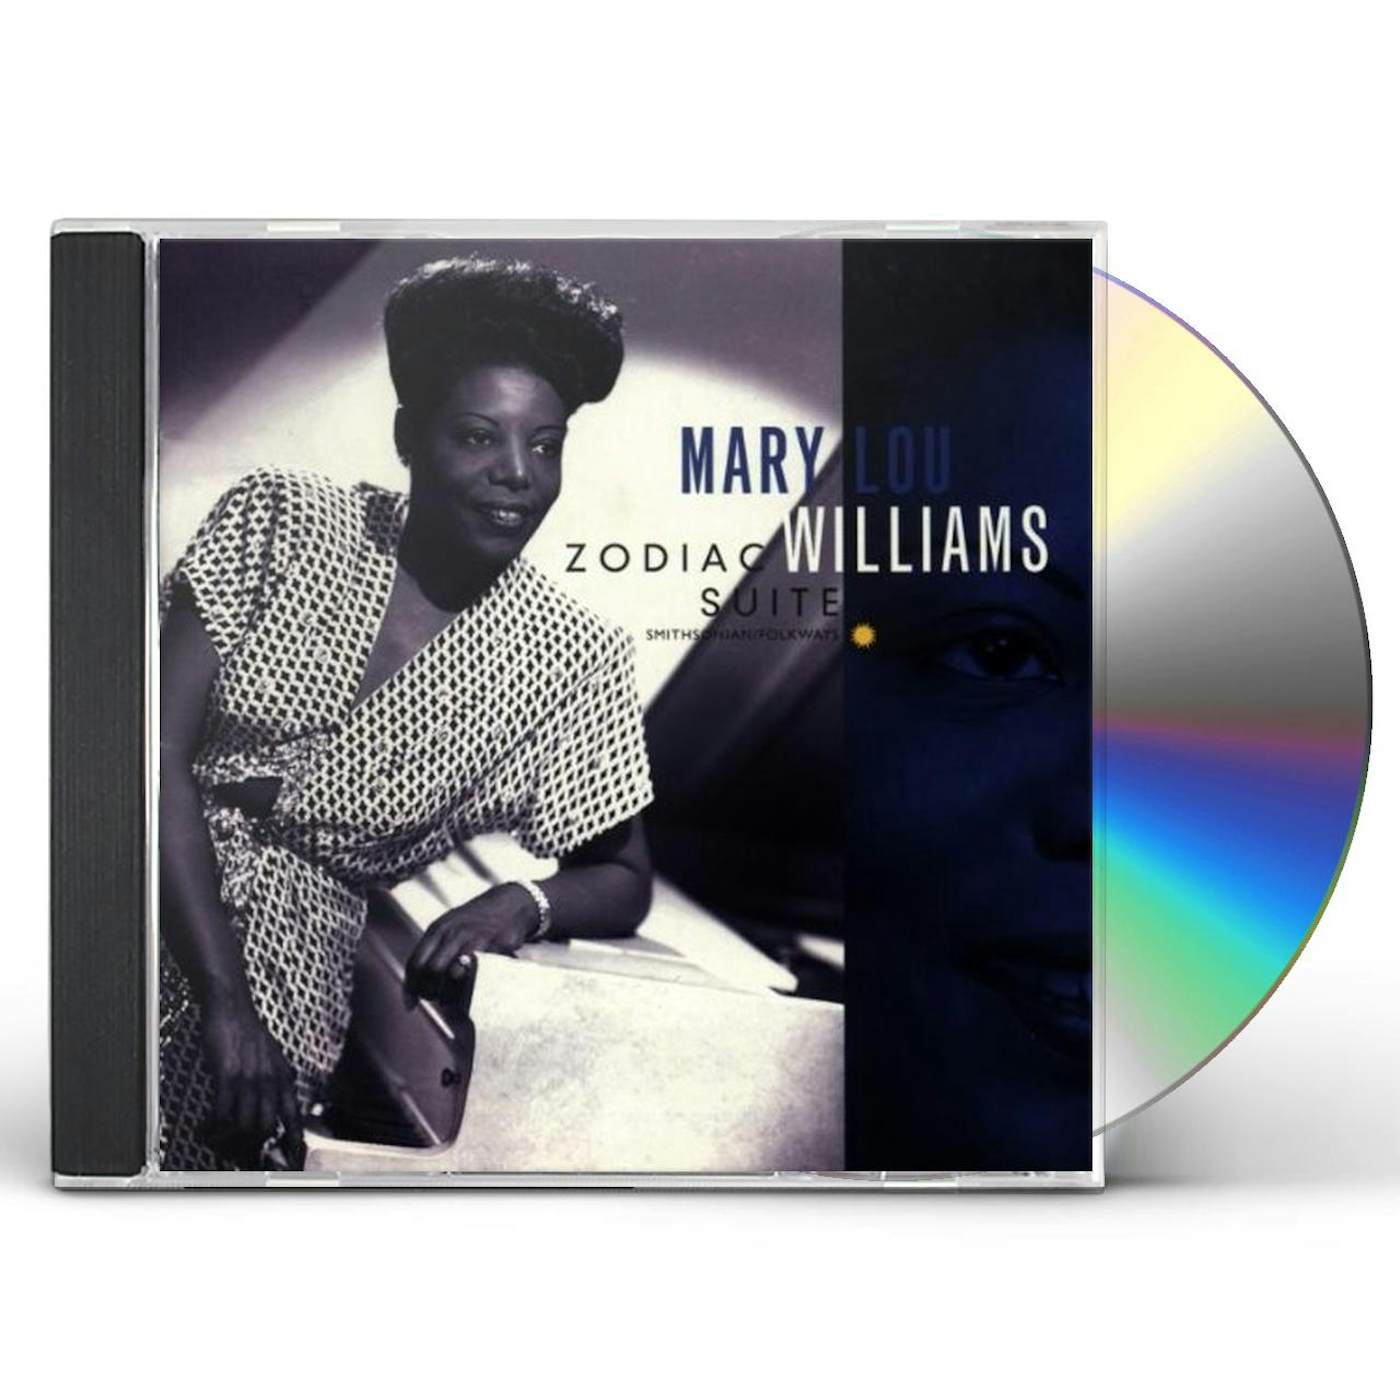 Mary Lou Williams ZODIAC SUITE CD